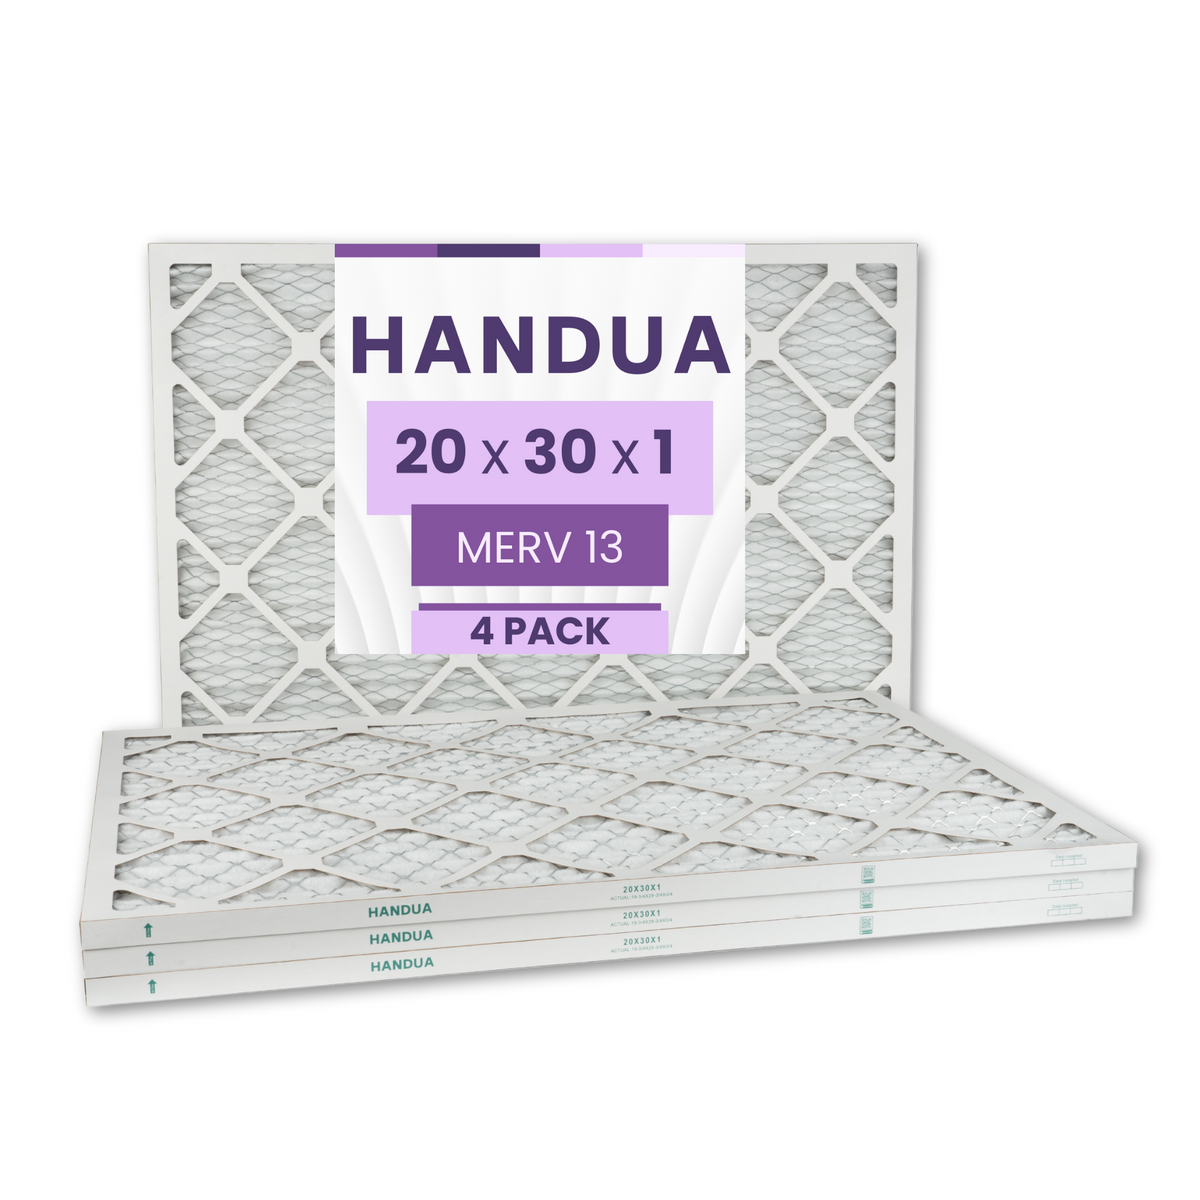 Handua 20x30x1 Air Filter MERV 13 Optimal Control, Plated Furnace AC Air Replacement Filter, 4 Pack (Actual Size: 19.75" x 29.75" x 0.75")